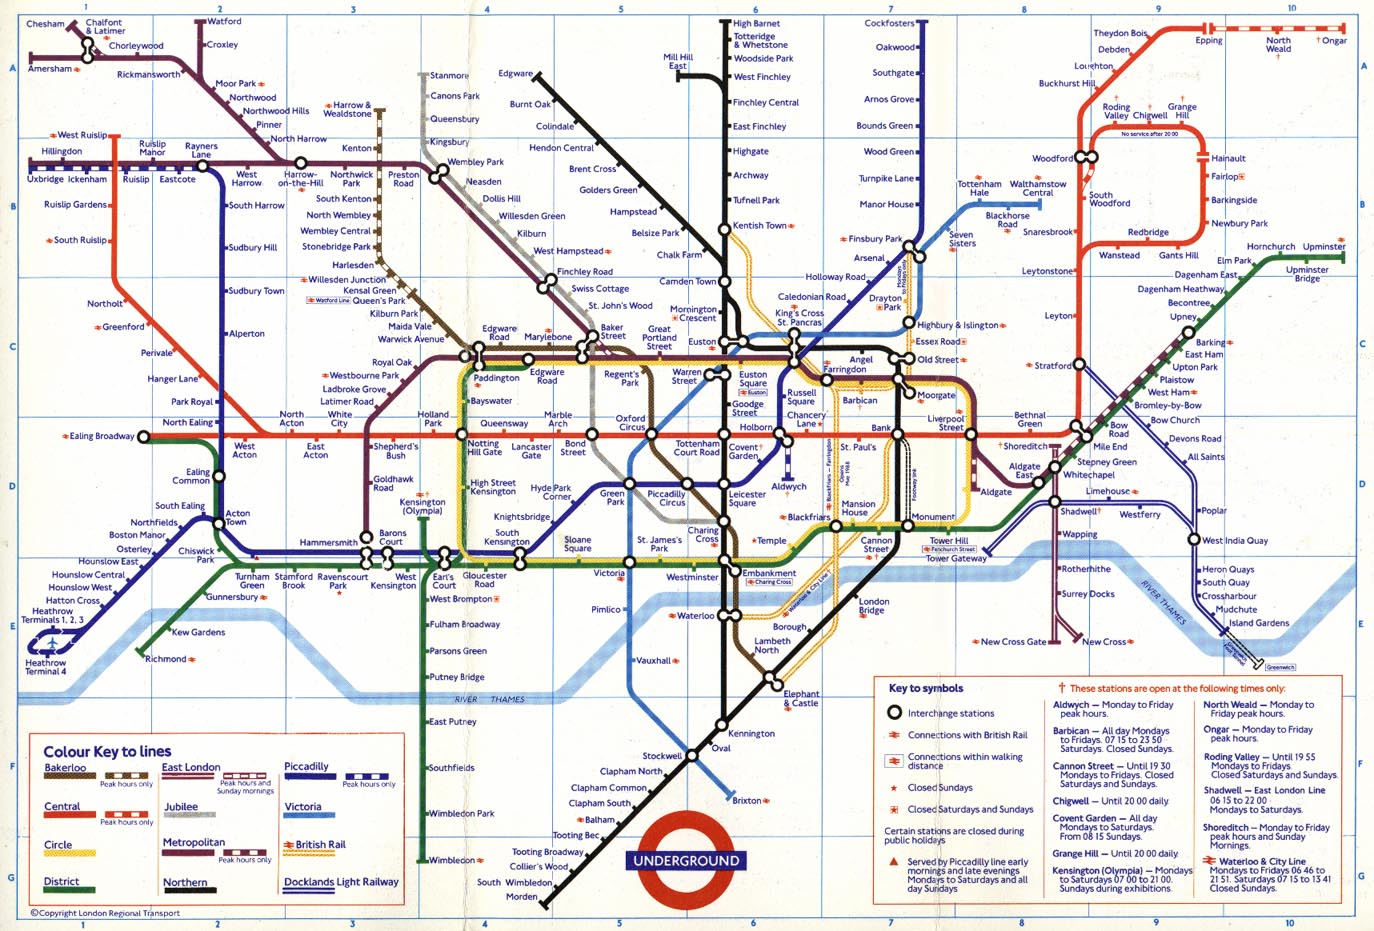 The London Underground | Jonathan Wynn